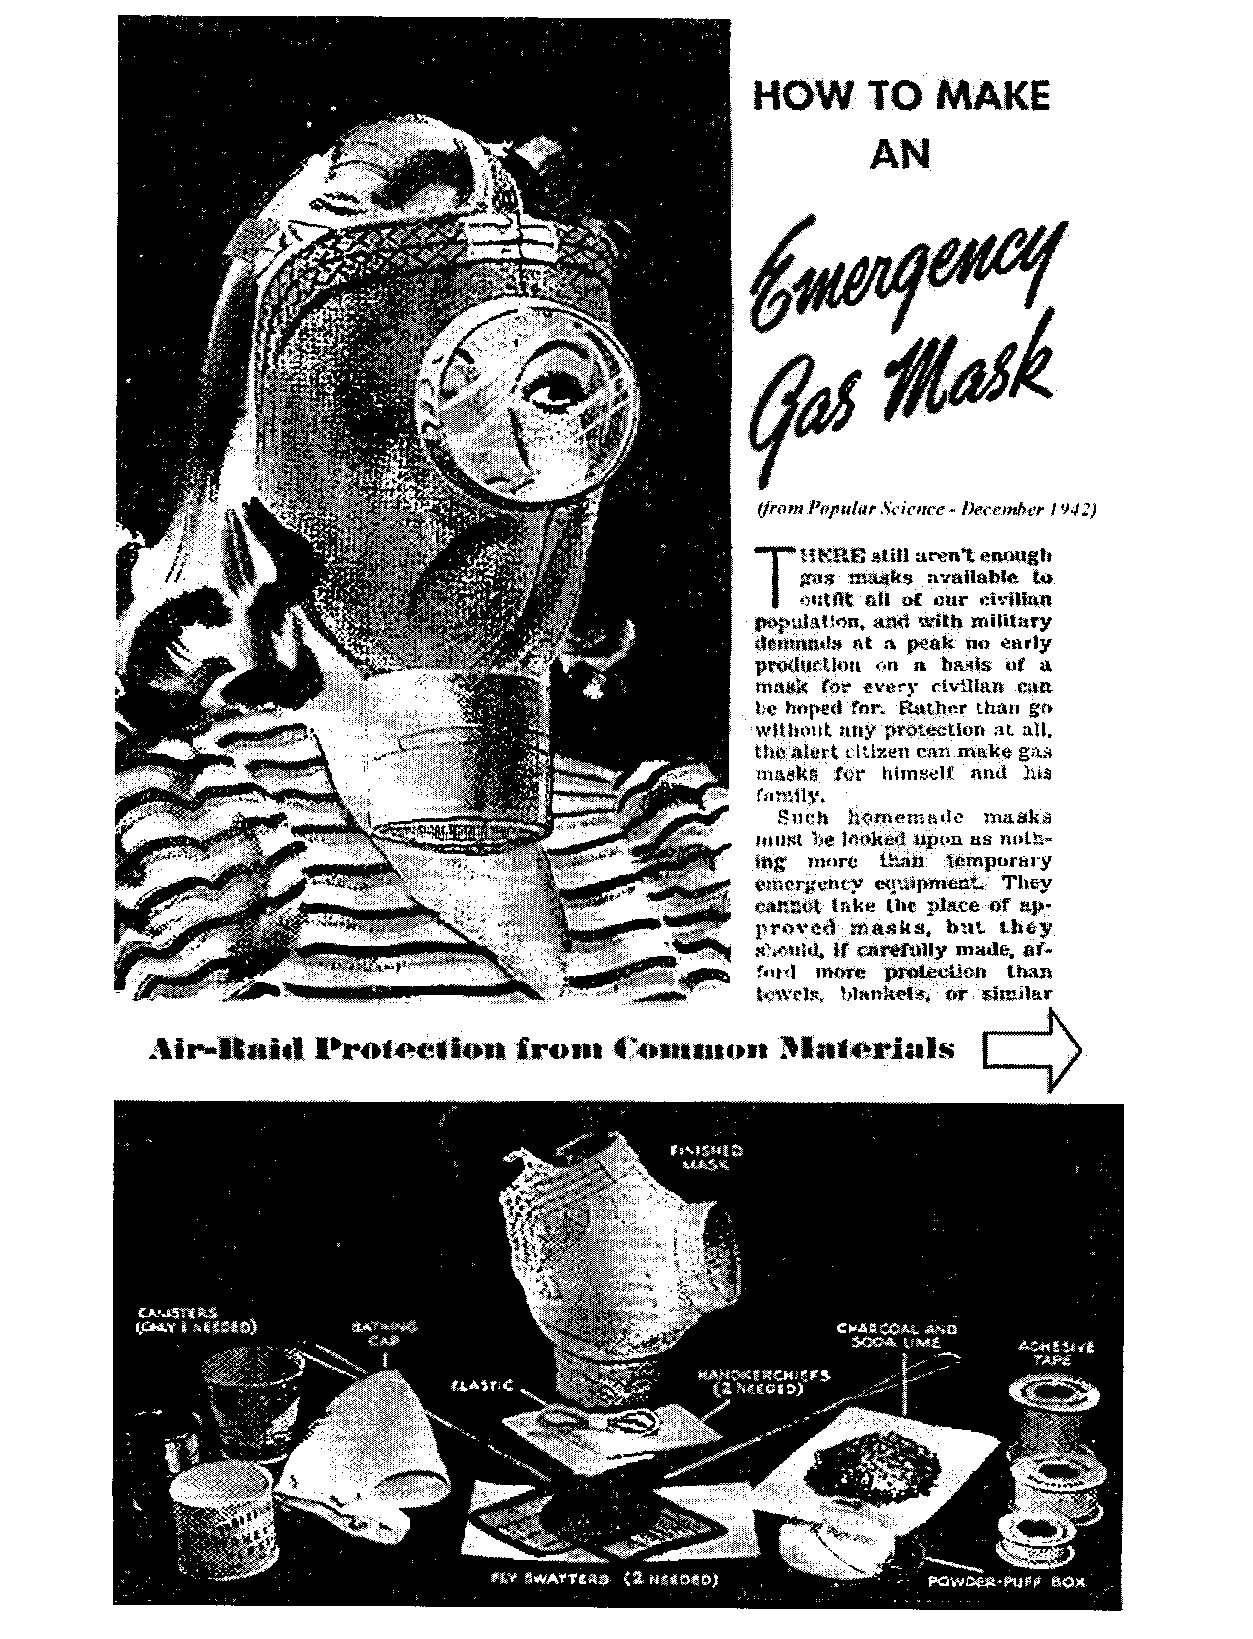 How To Make An Emergency Gas Mask - Popular Mechanics (1942)